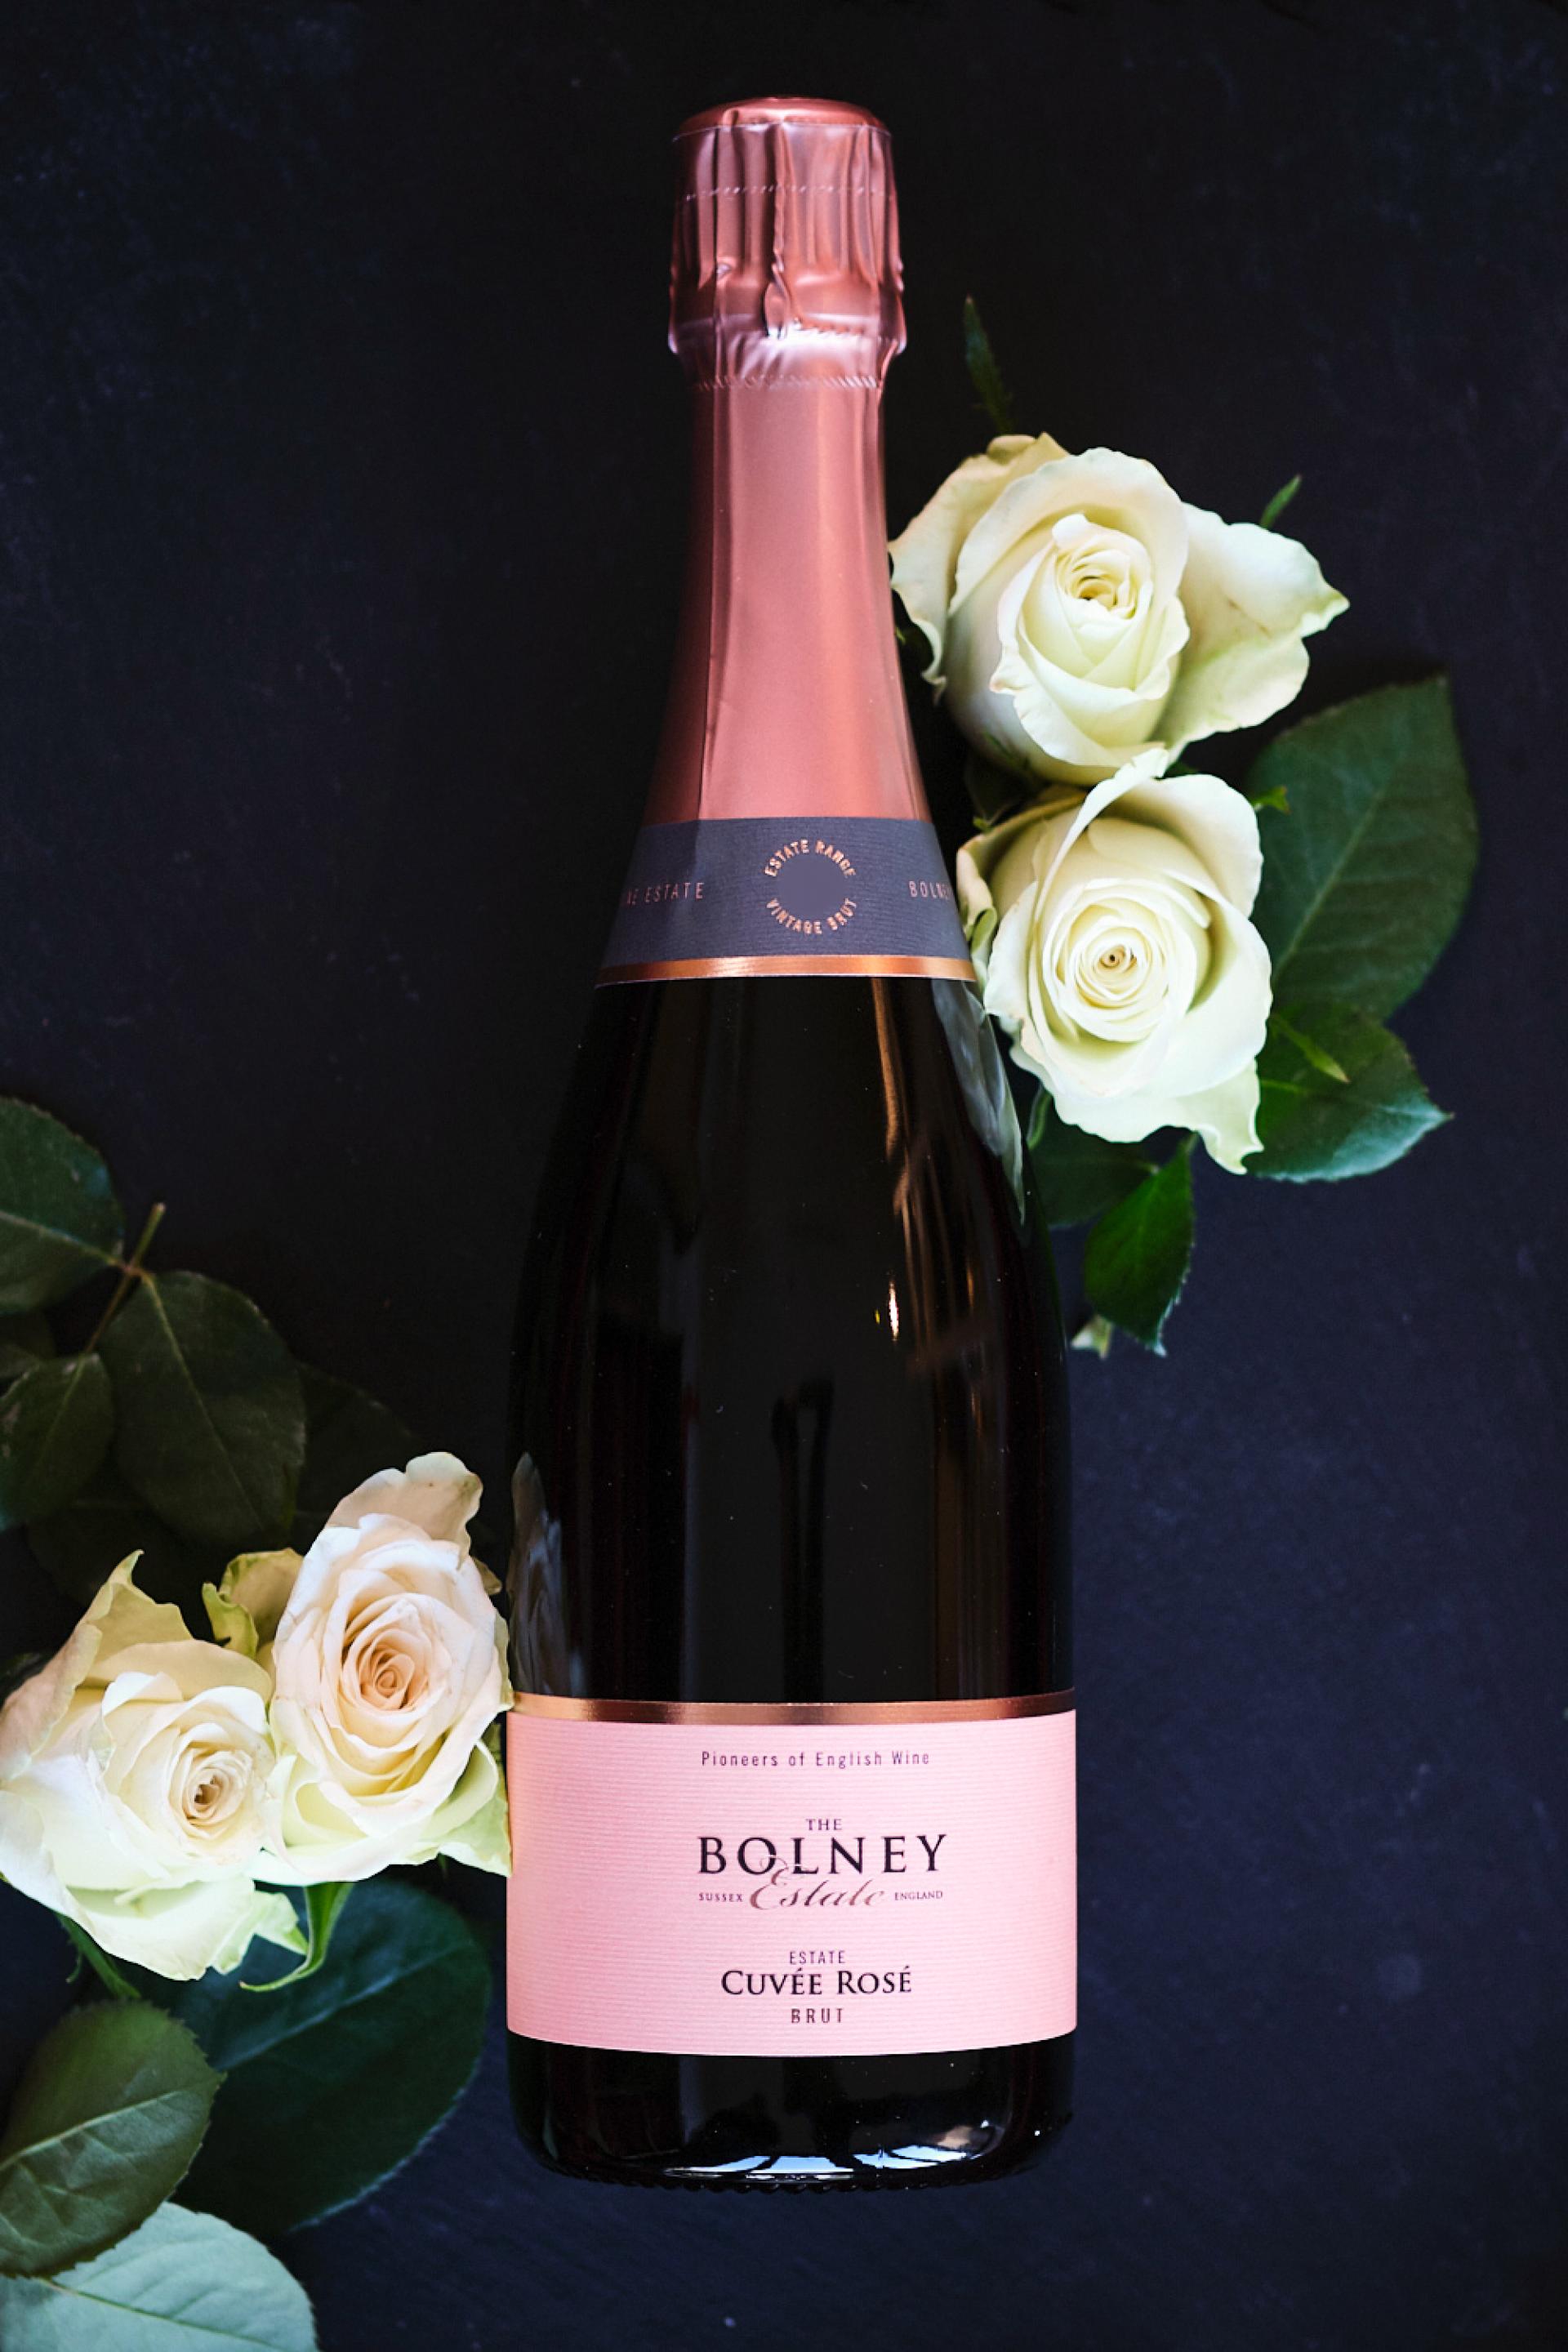 Bolney Cuvée Rosé 2018